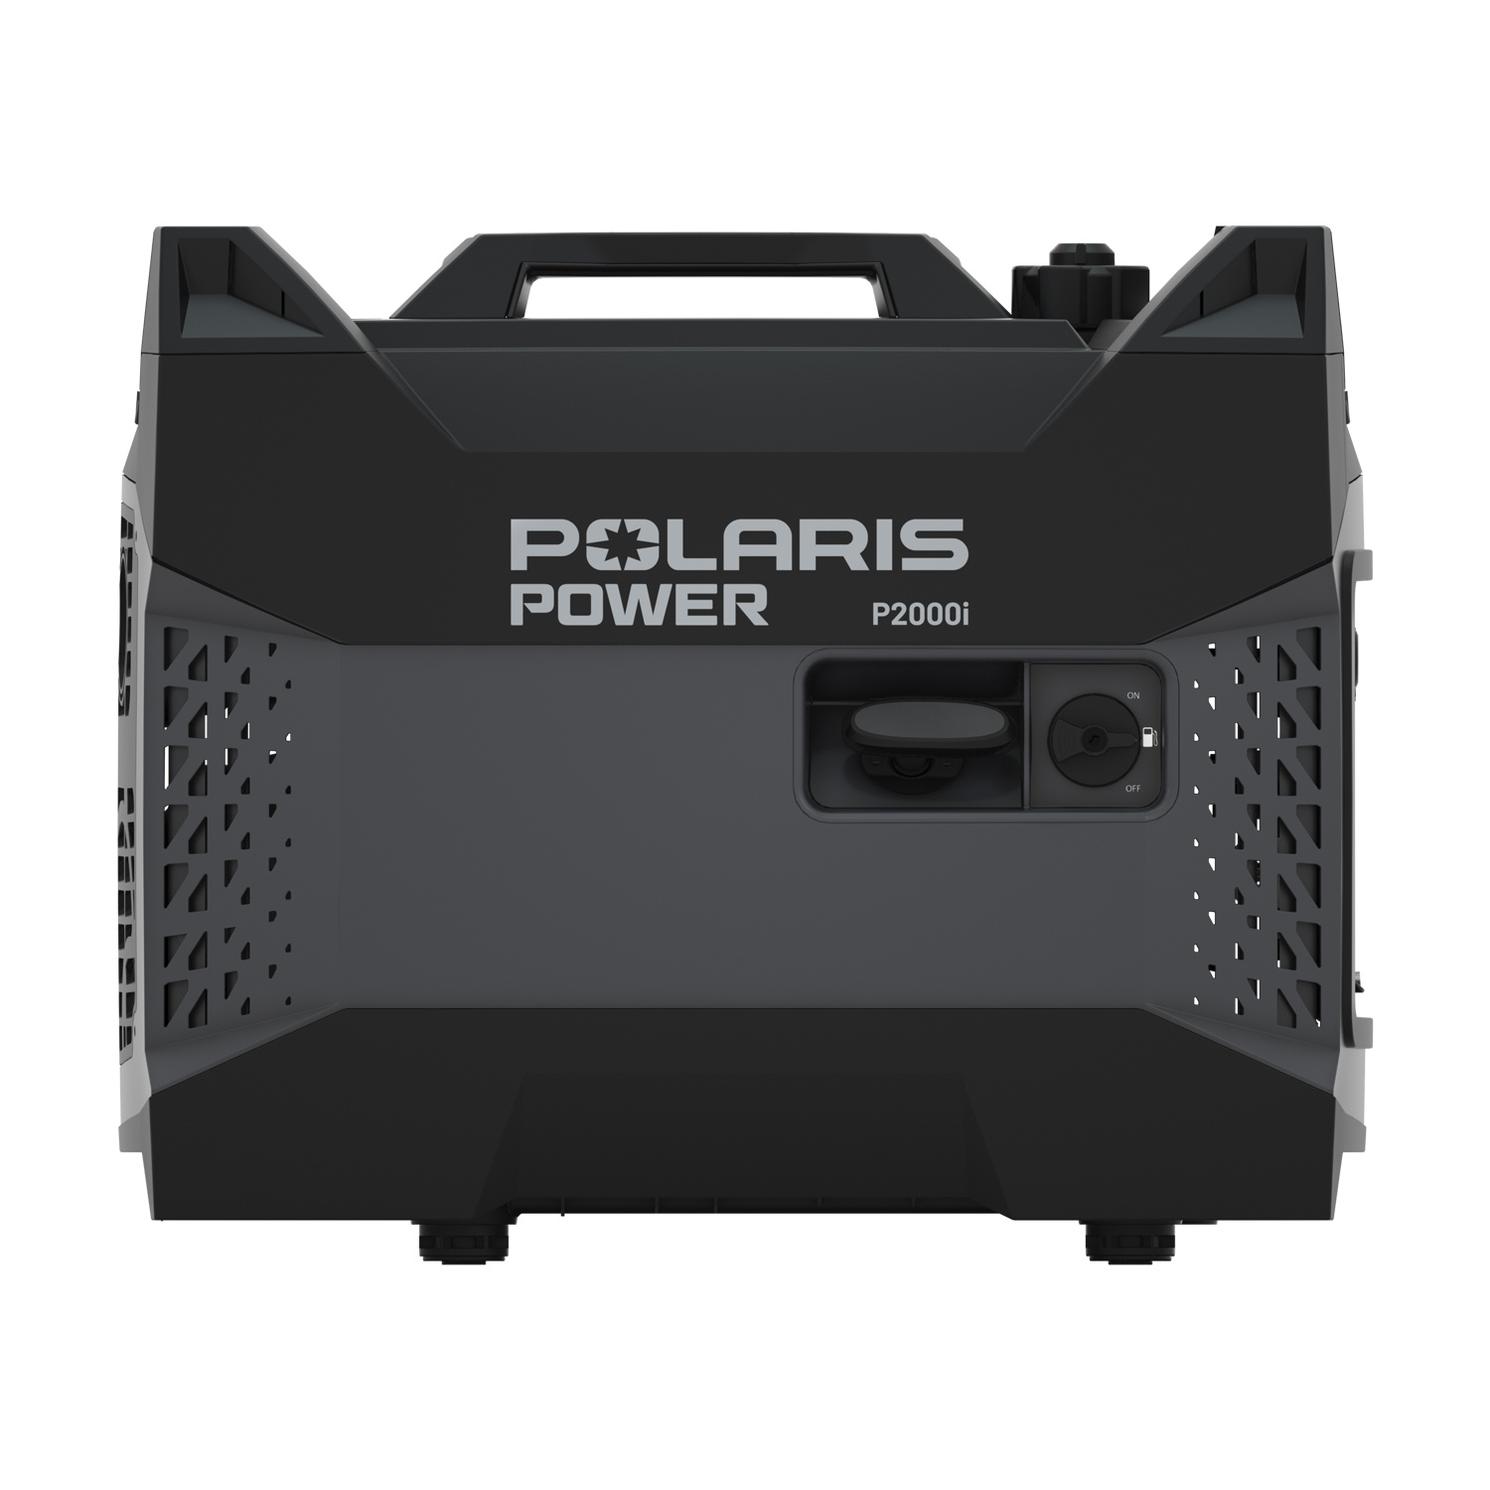 Polaris Power  Portable Inverter Generator P2000i 